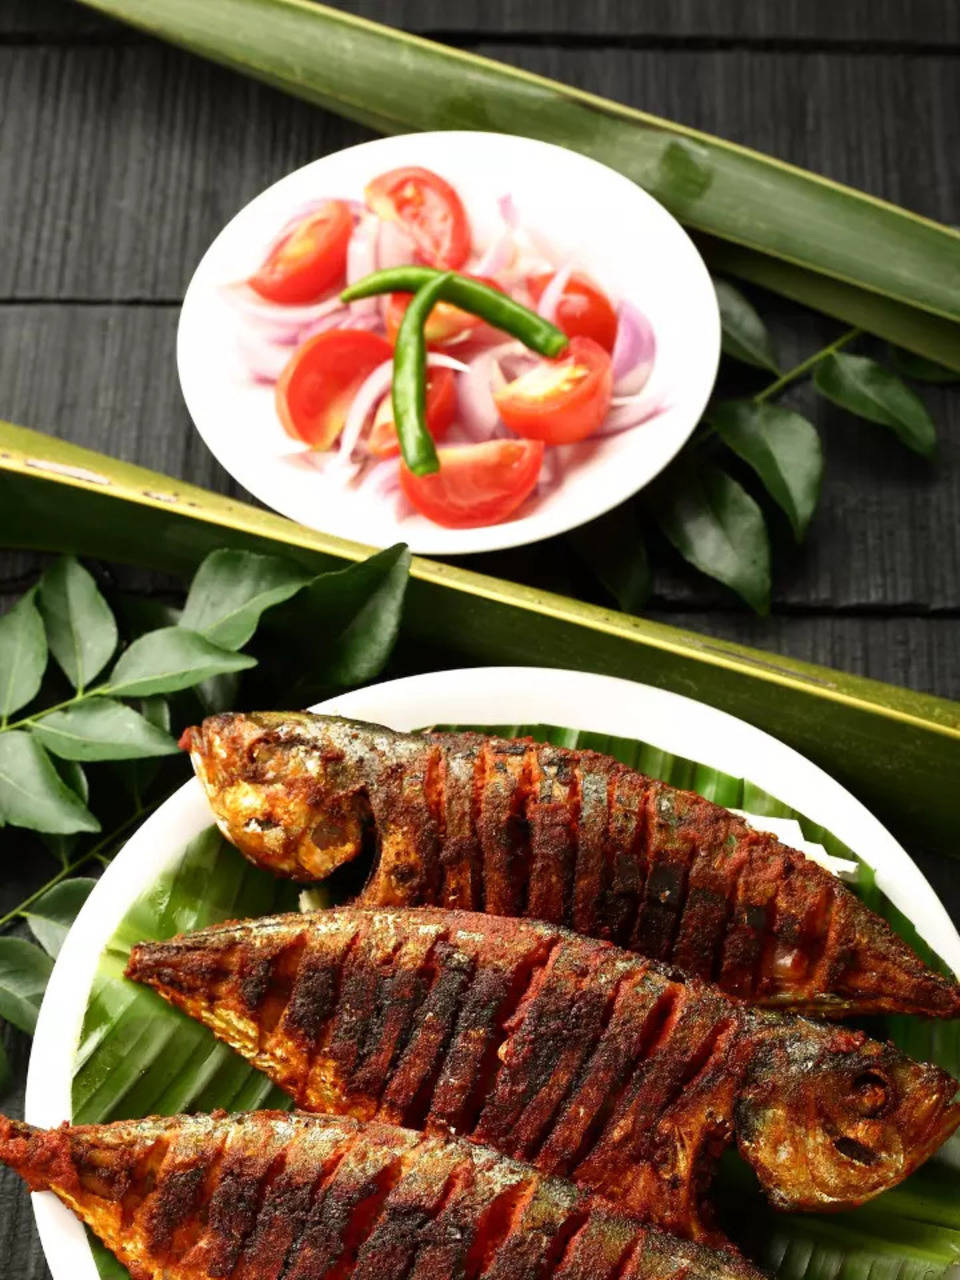 Mangalorean Chili, Salt and Vinegar Marinade + Fish Fry - My Food Story